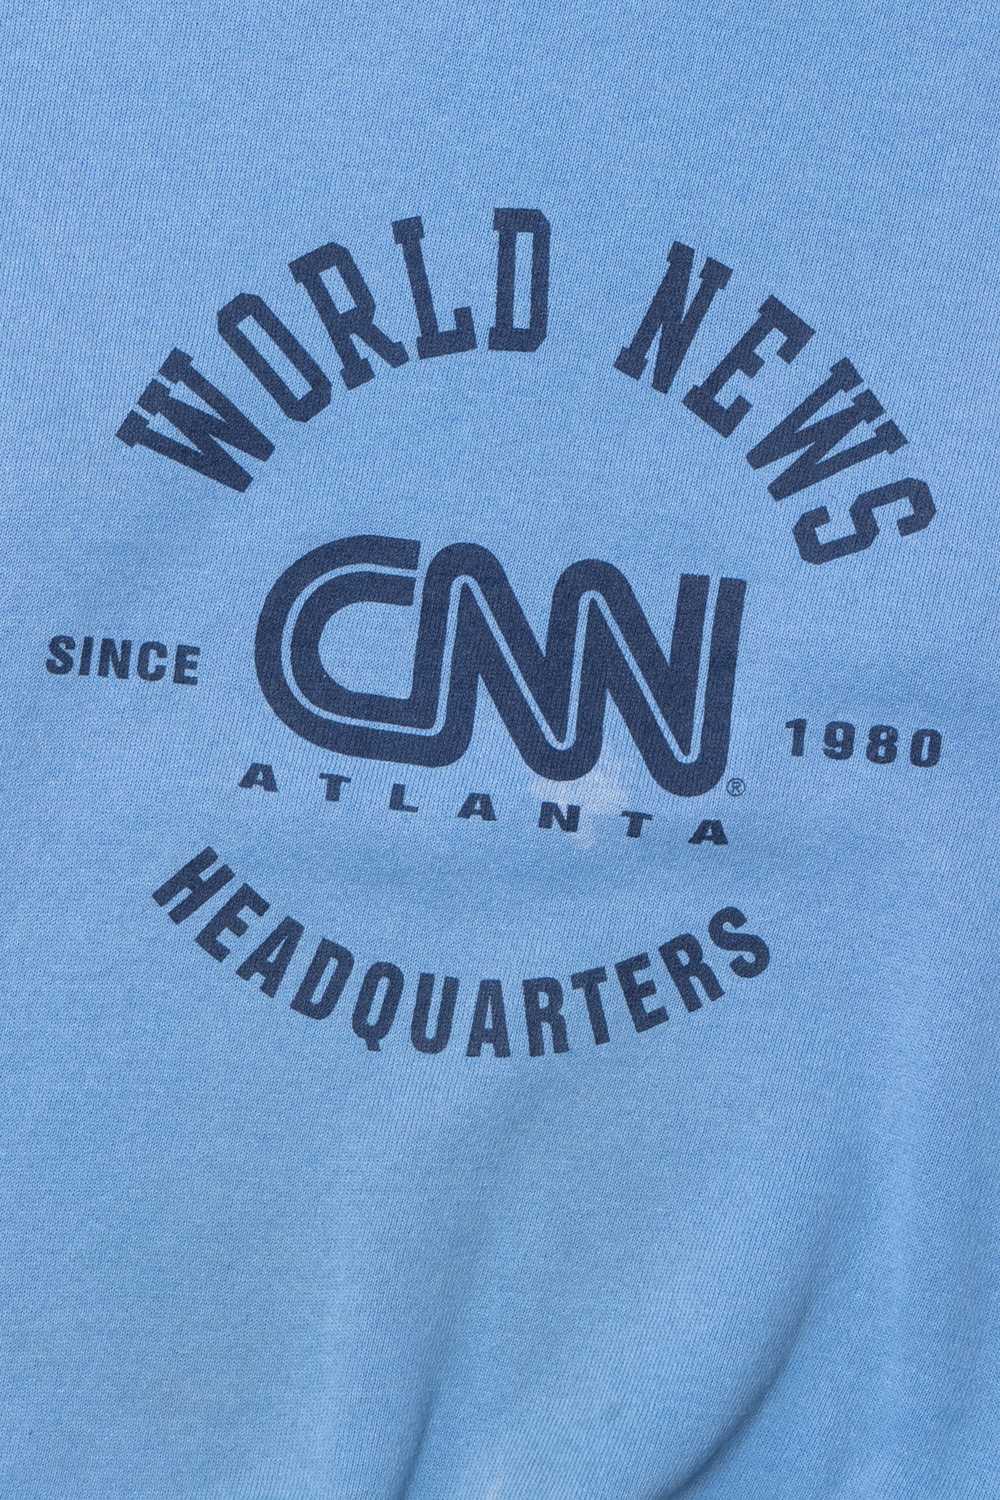 "CNN World News Headquarters Atlanta" Sweatshirt - image 2